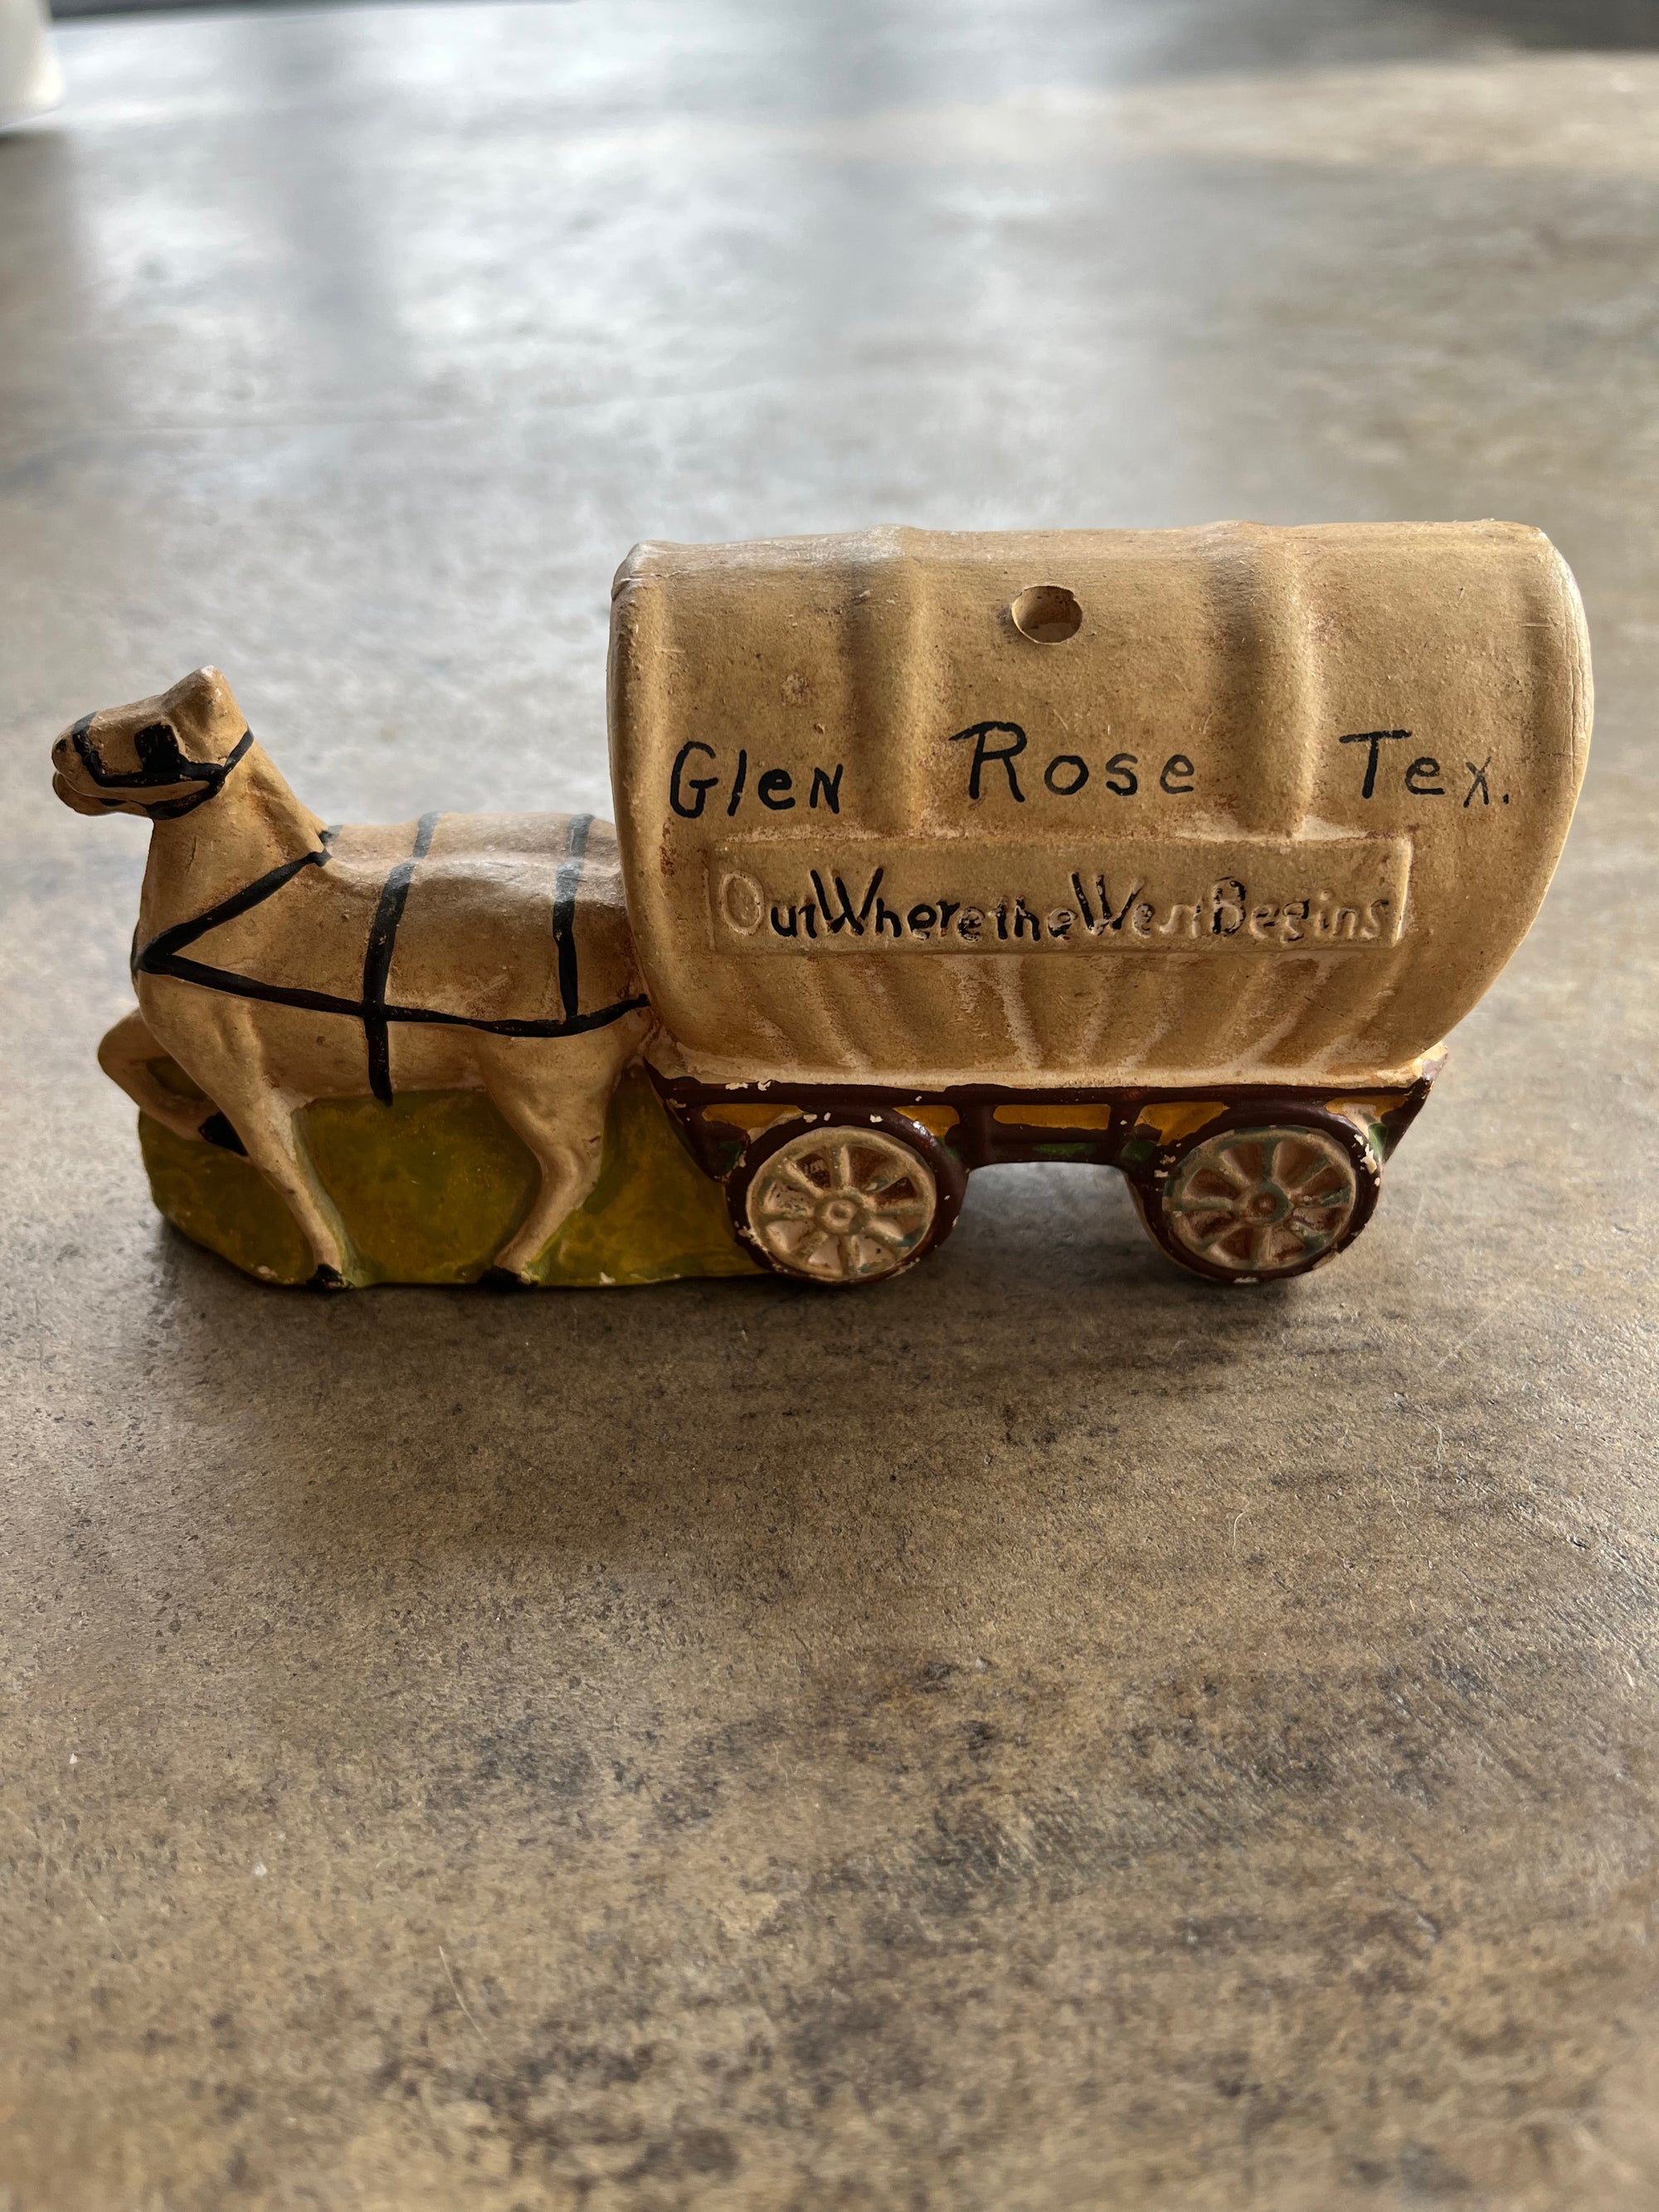 Ceramic Horse Drawn Wagon